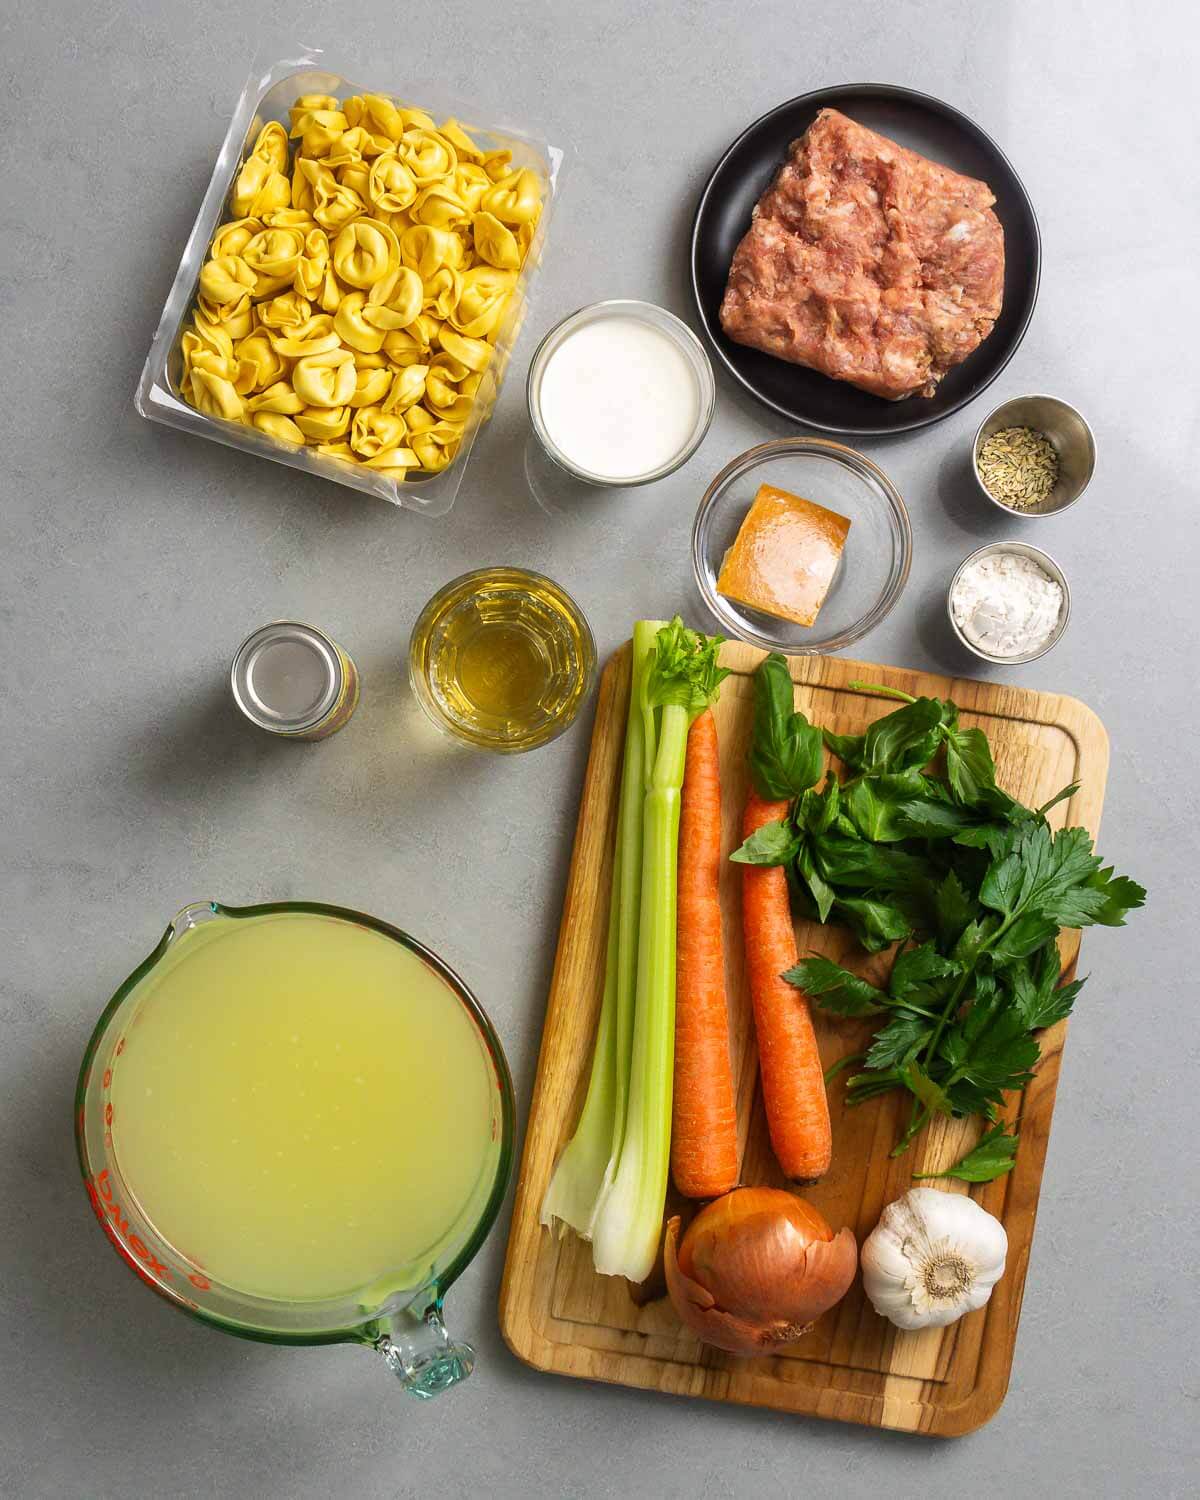 Ingredients shown: tortellini, cream ,sausage, tomato paste, wine, parmesan rind, flour, fennel seeds, chicken stock, celery, carrots, onion, garlic, basil, and parsley.